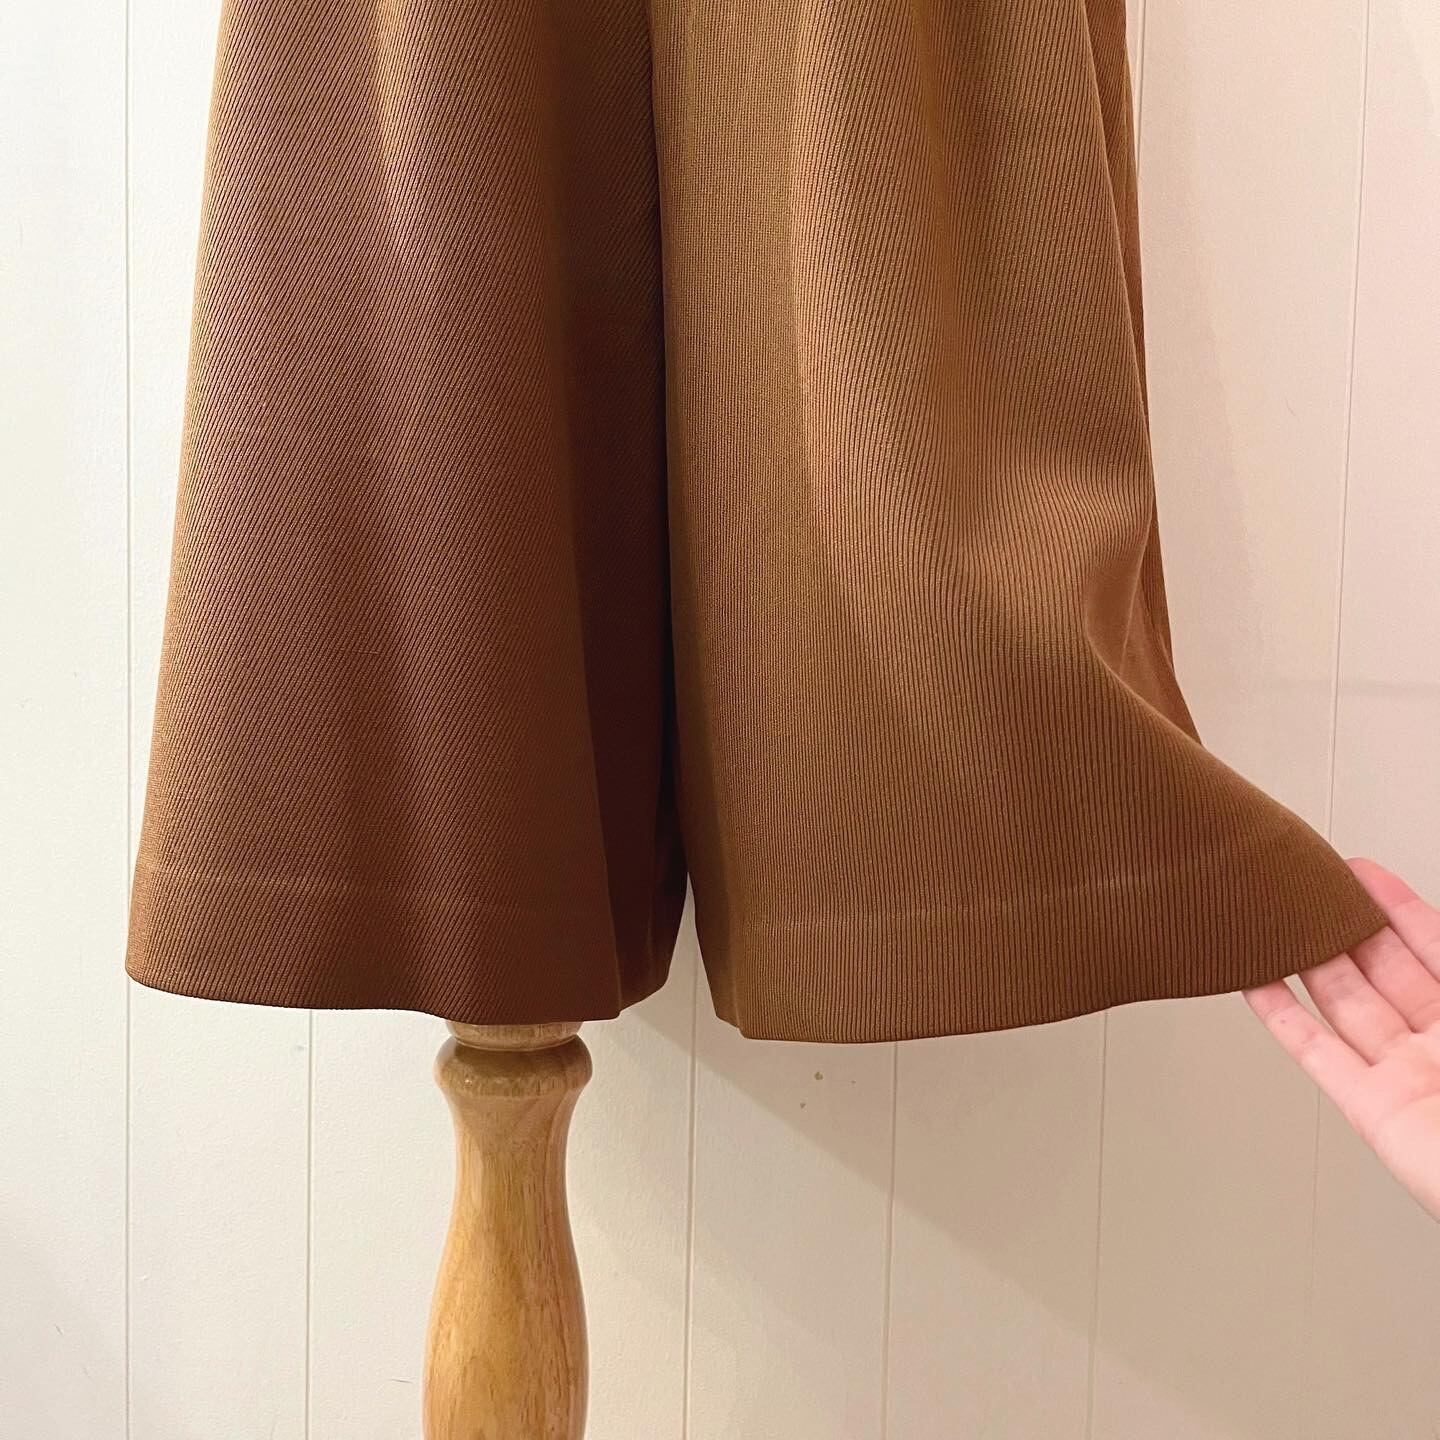 Christian Dior sports / brown half pants